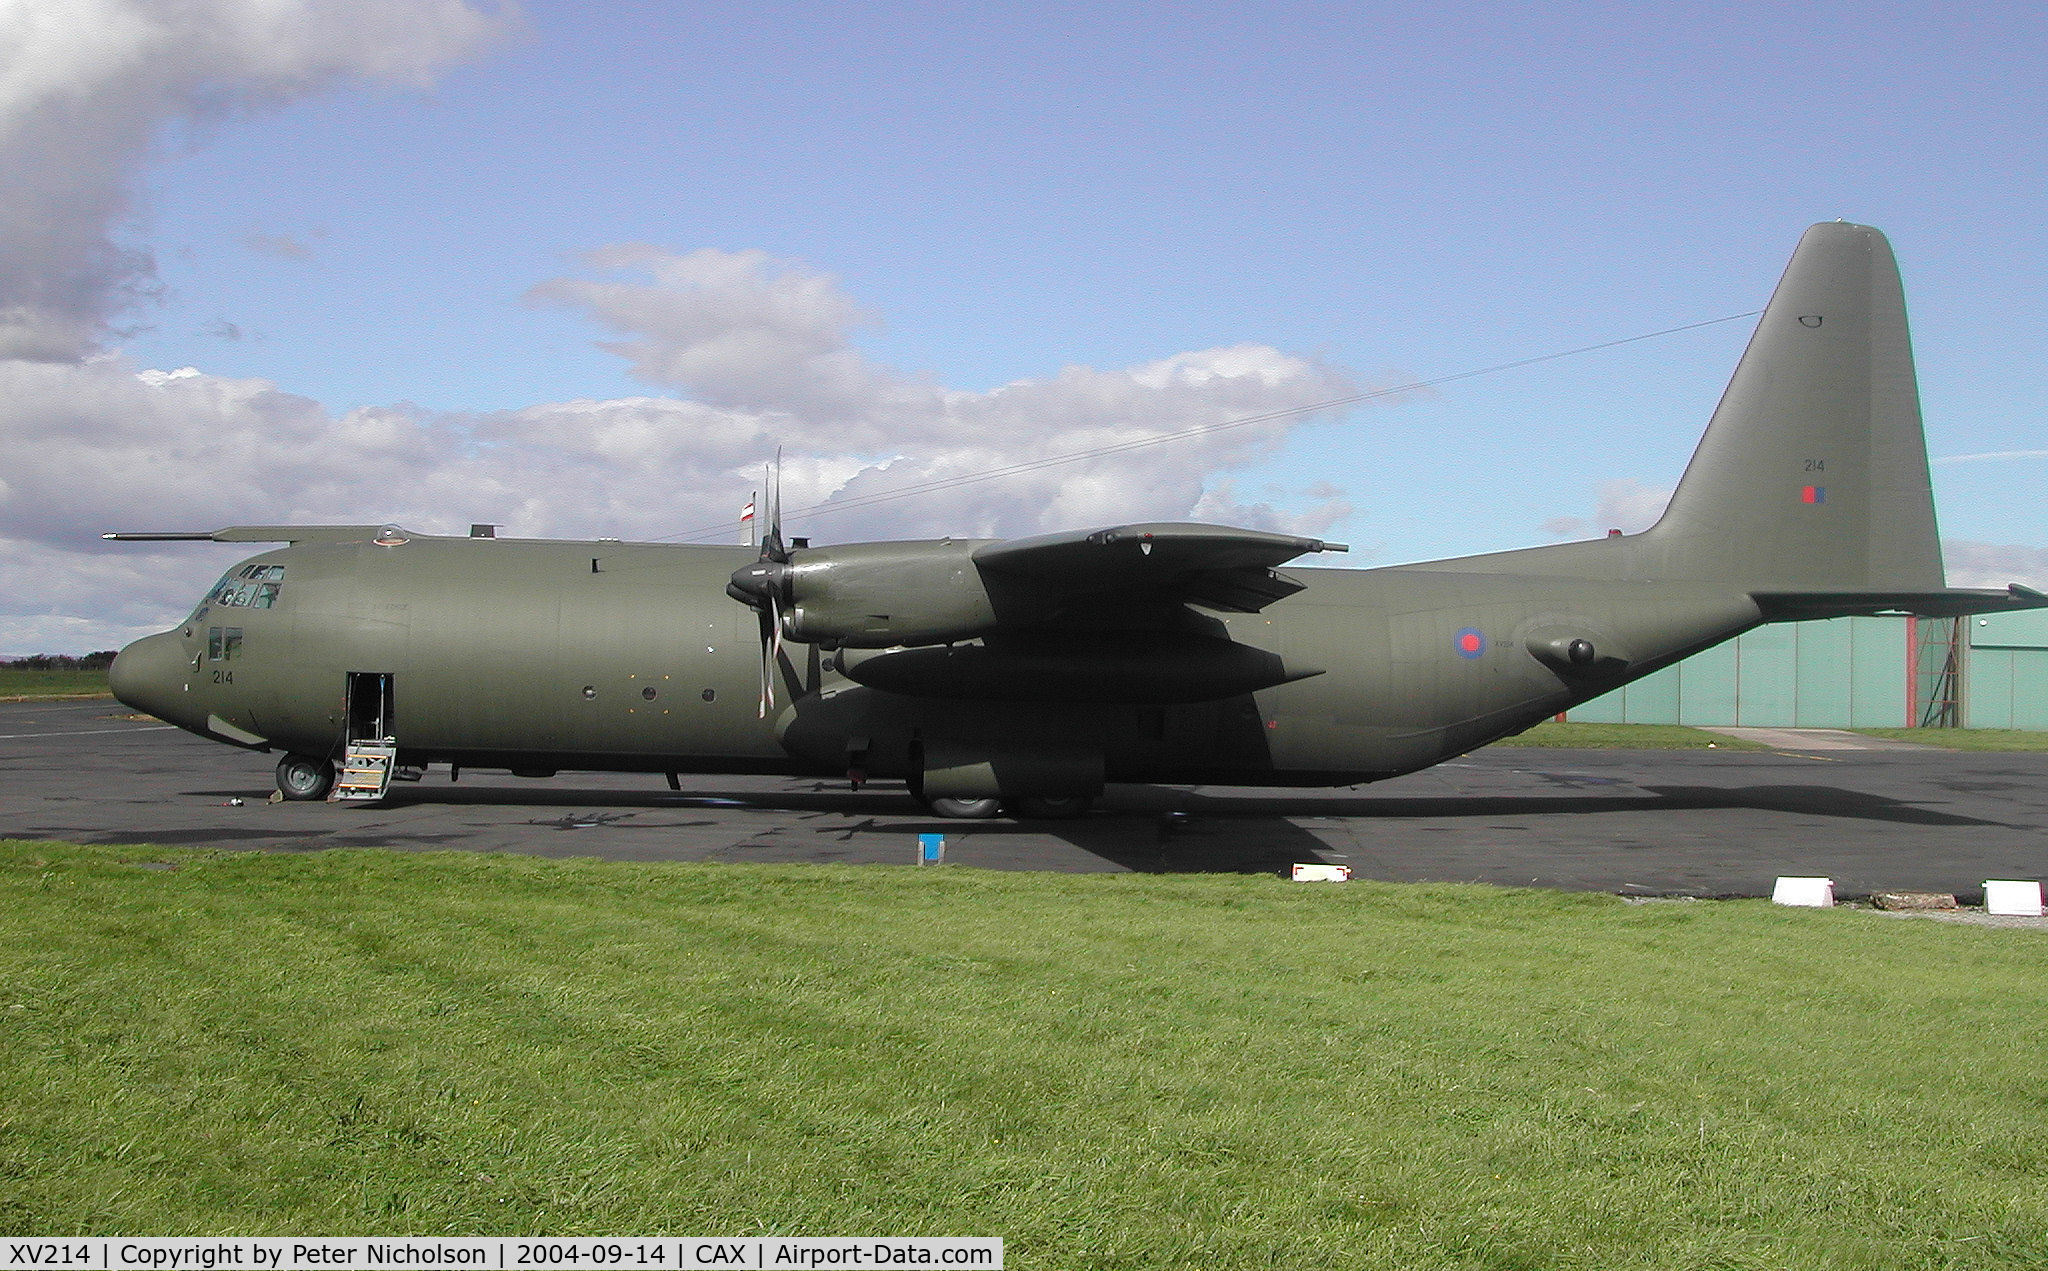 XV214, 1966 Lockheed C-130K Hercules C.3 C/N 382-4241, Hercules C.3, callsign Ascot 617, of the Lyneham Transport Wing as seen at Carlisle in September 2004.